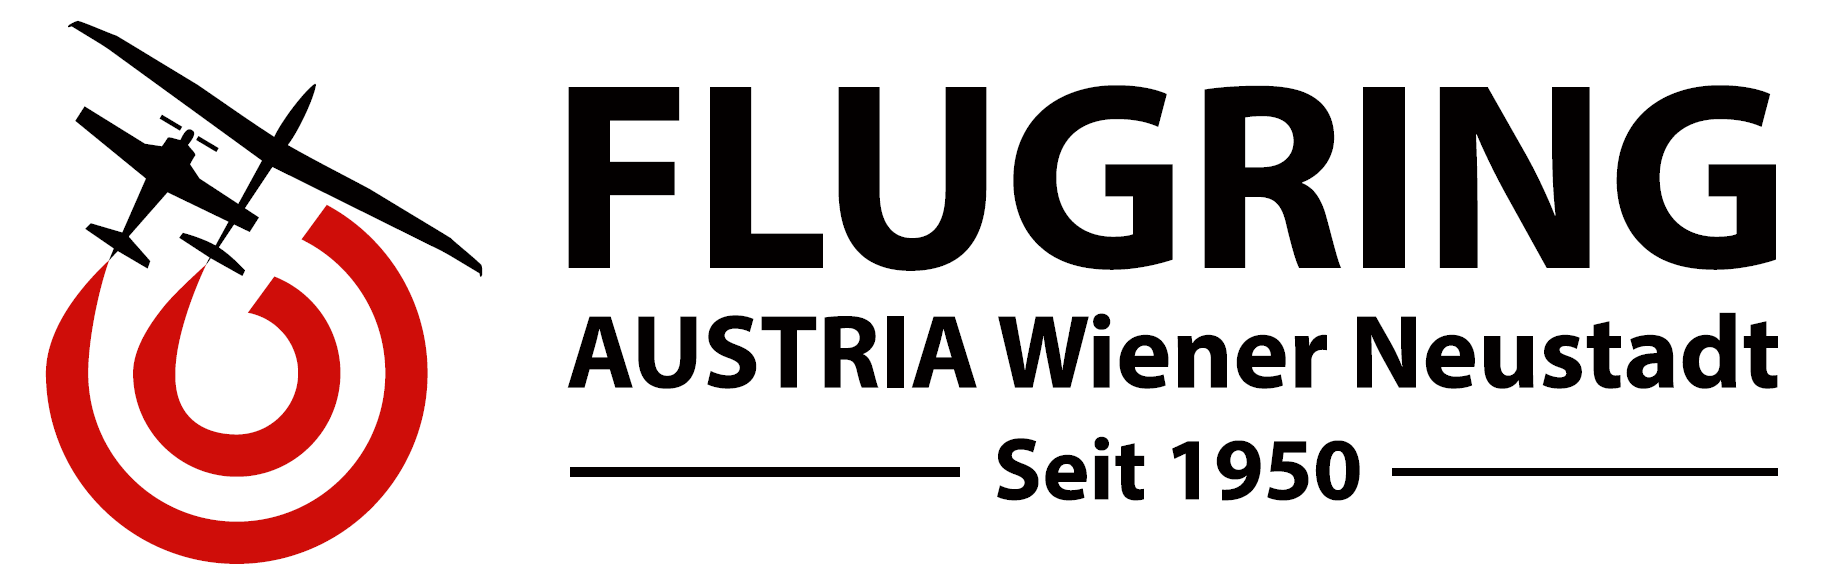 Flugring Austria Wiener Neustadt